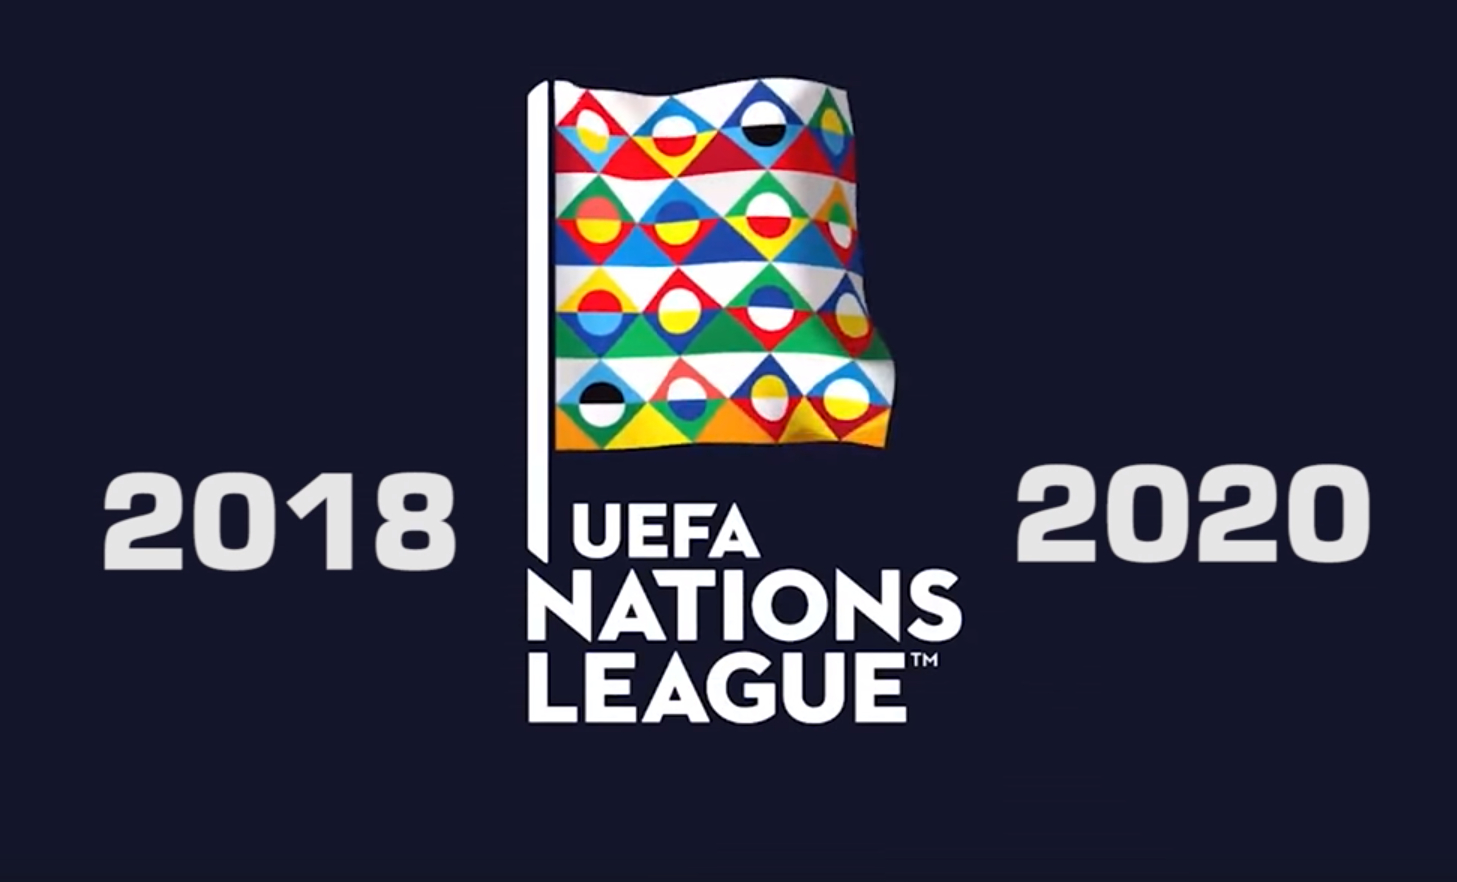 national league uefa 2020